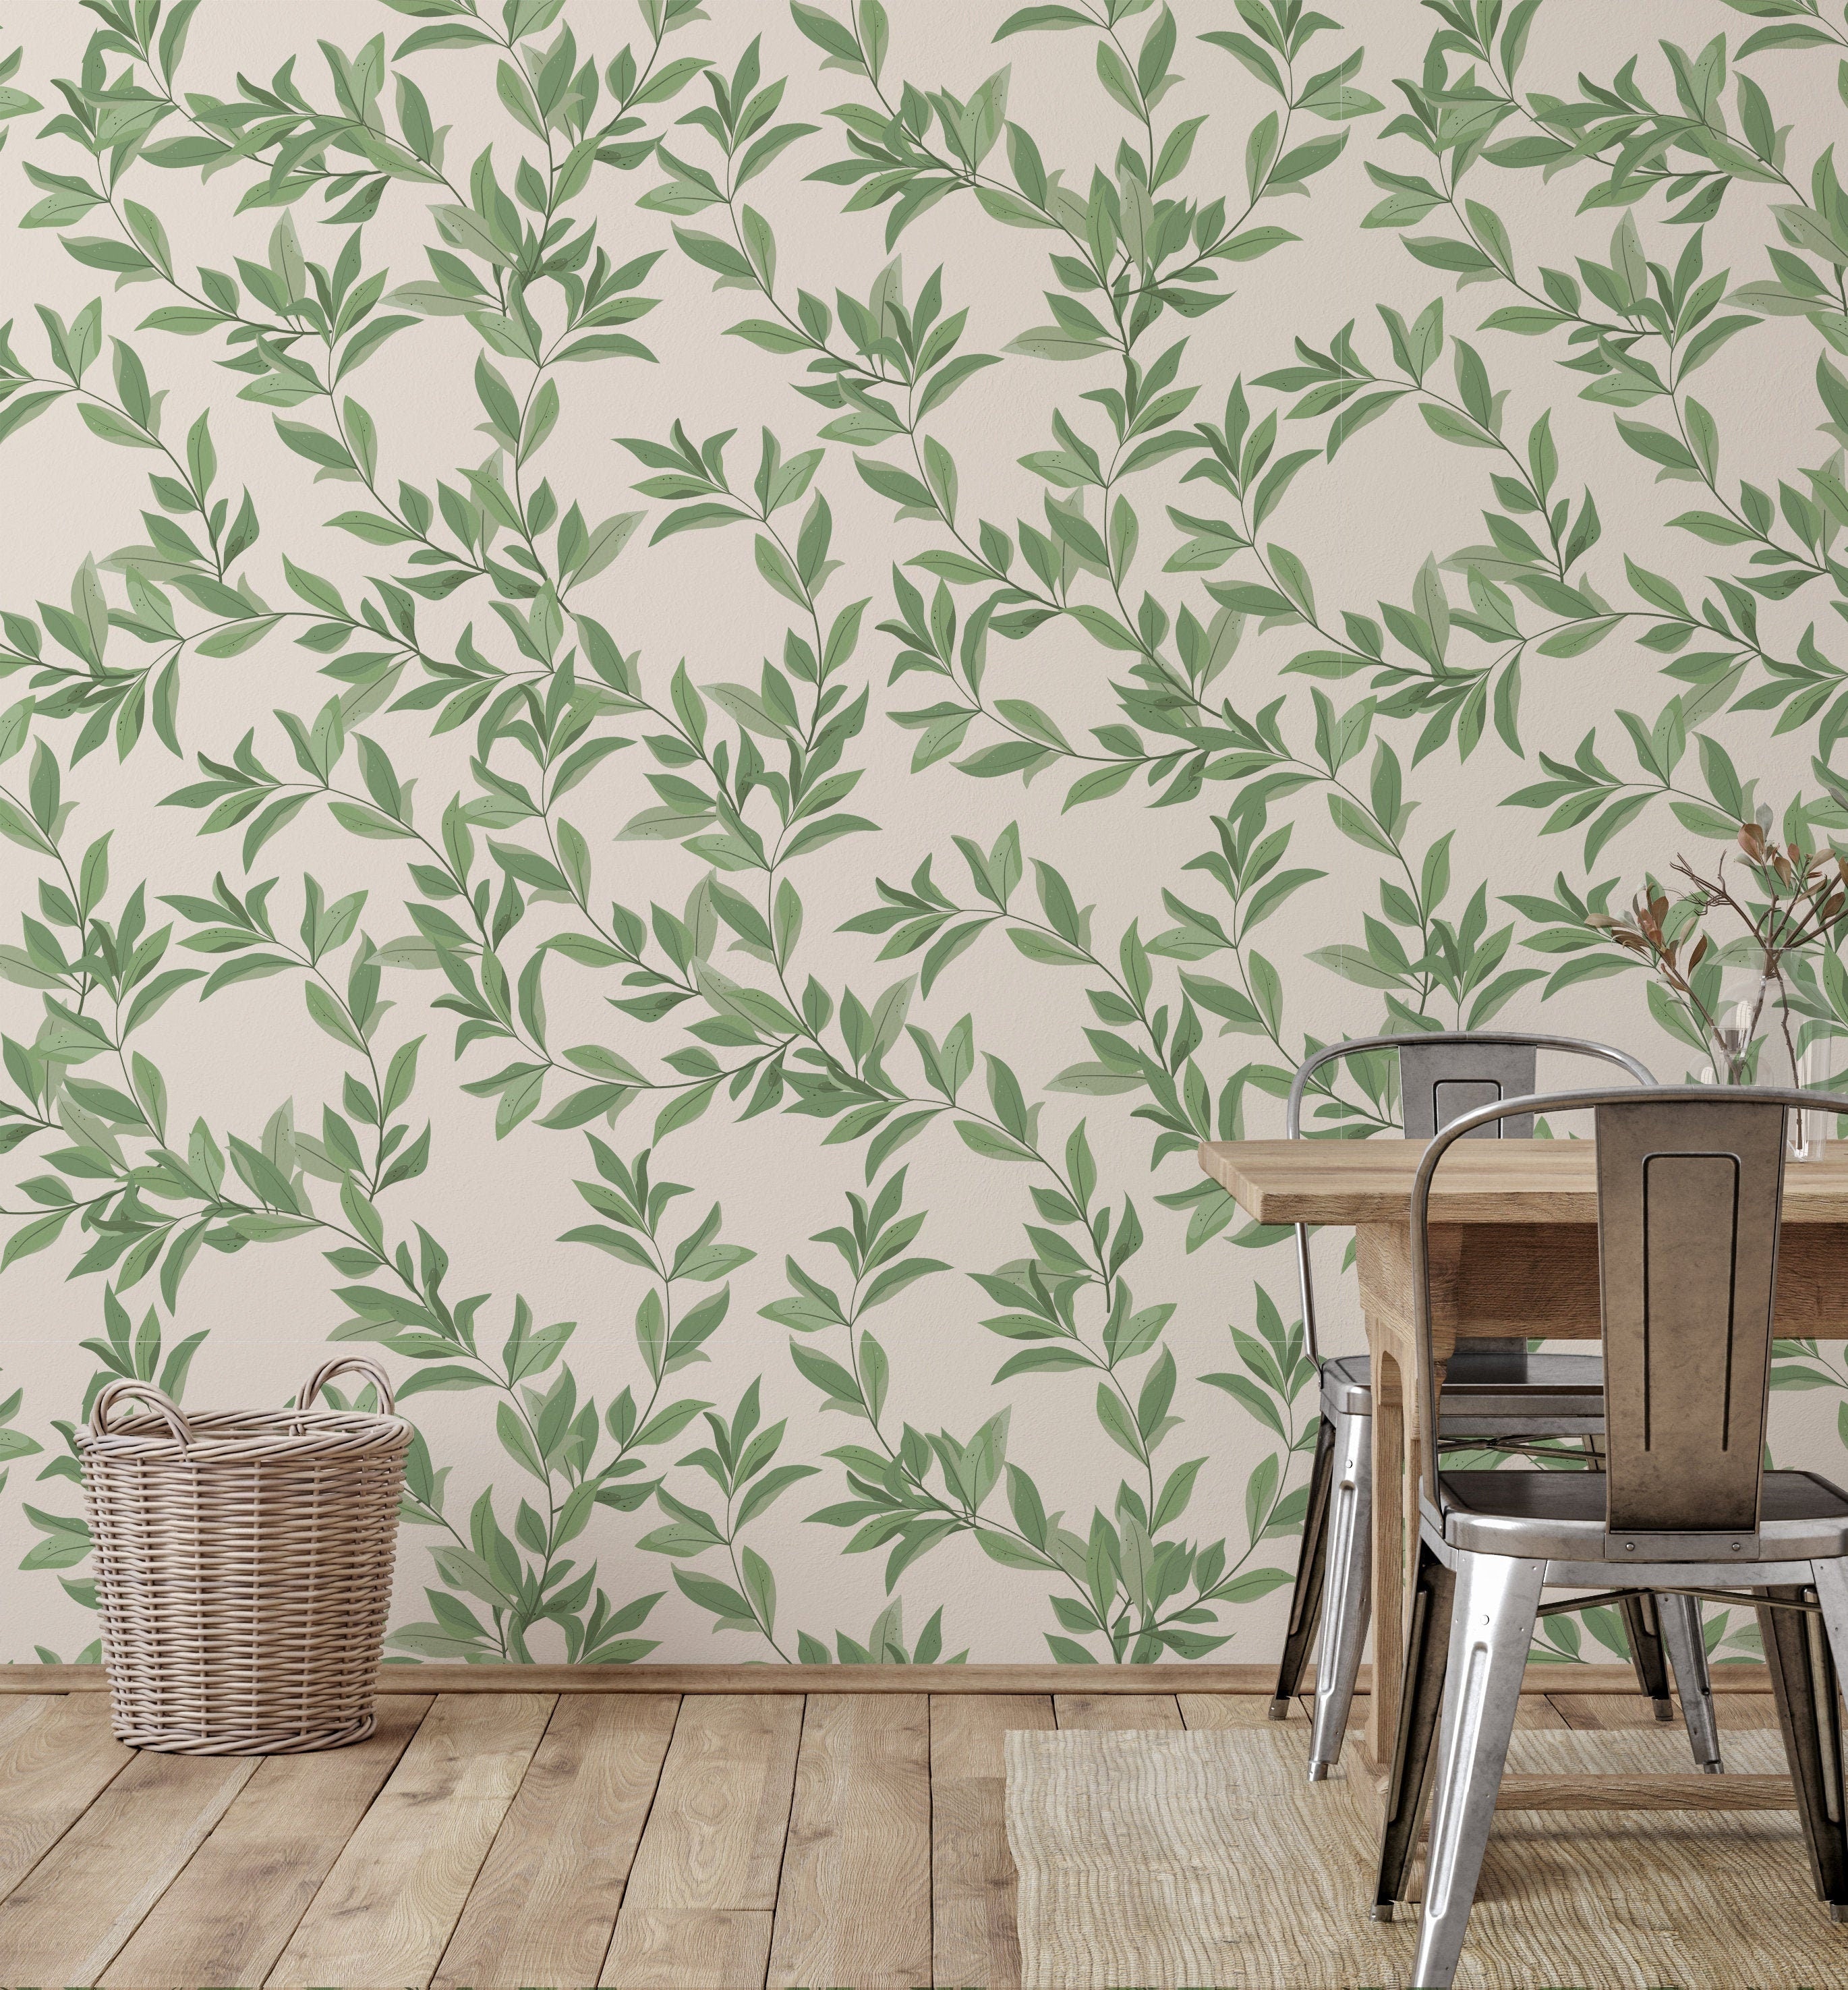 Beige Green Foliage Wallpaper | Removable Wallpaper | Peel And Stick Wallpaper | Adhesive Wallpaper | Wall Paper Peel Stick Wall Mural 2374 - JamesAndColors